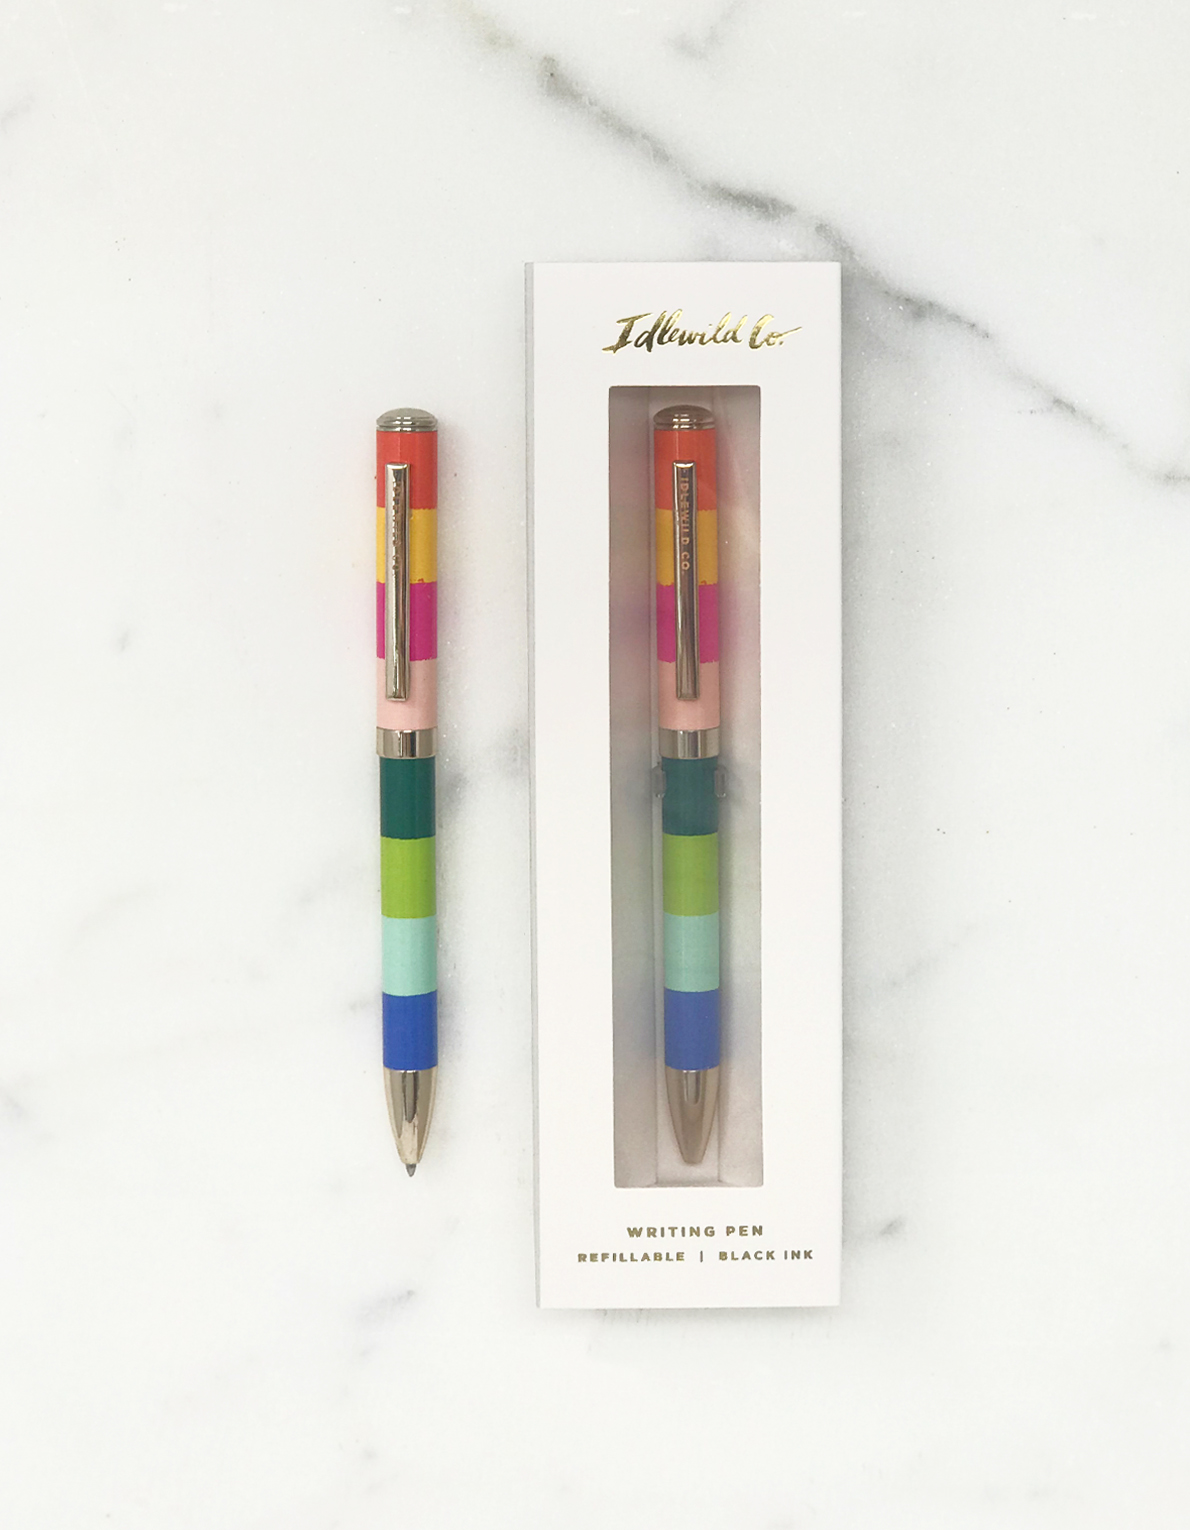 Rainbow Duotone Slim Pen Collection – Idlewild Co.